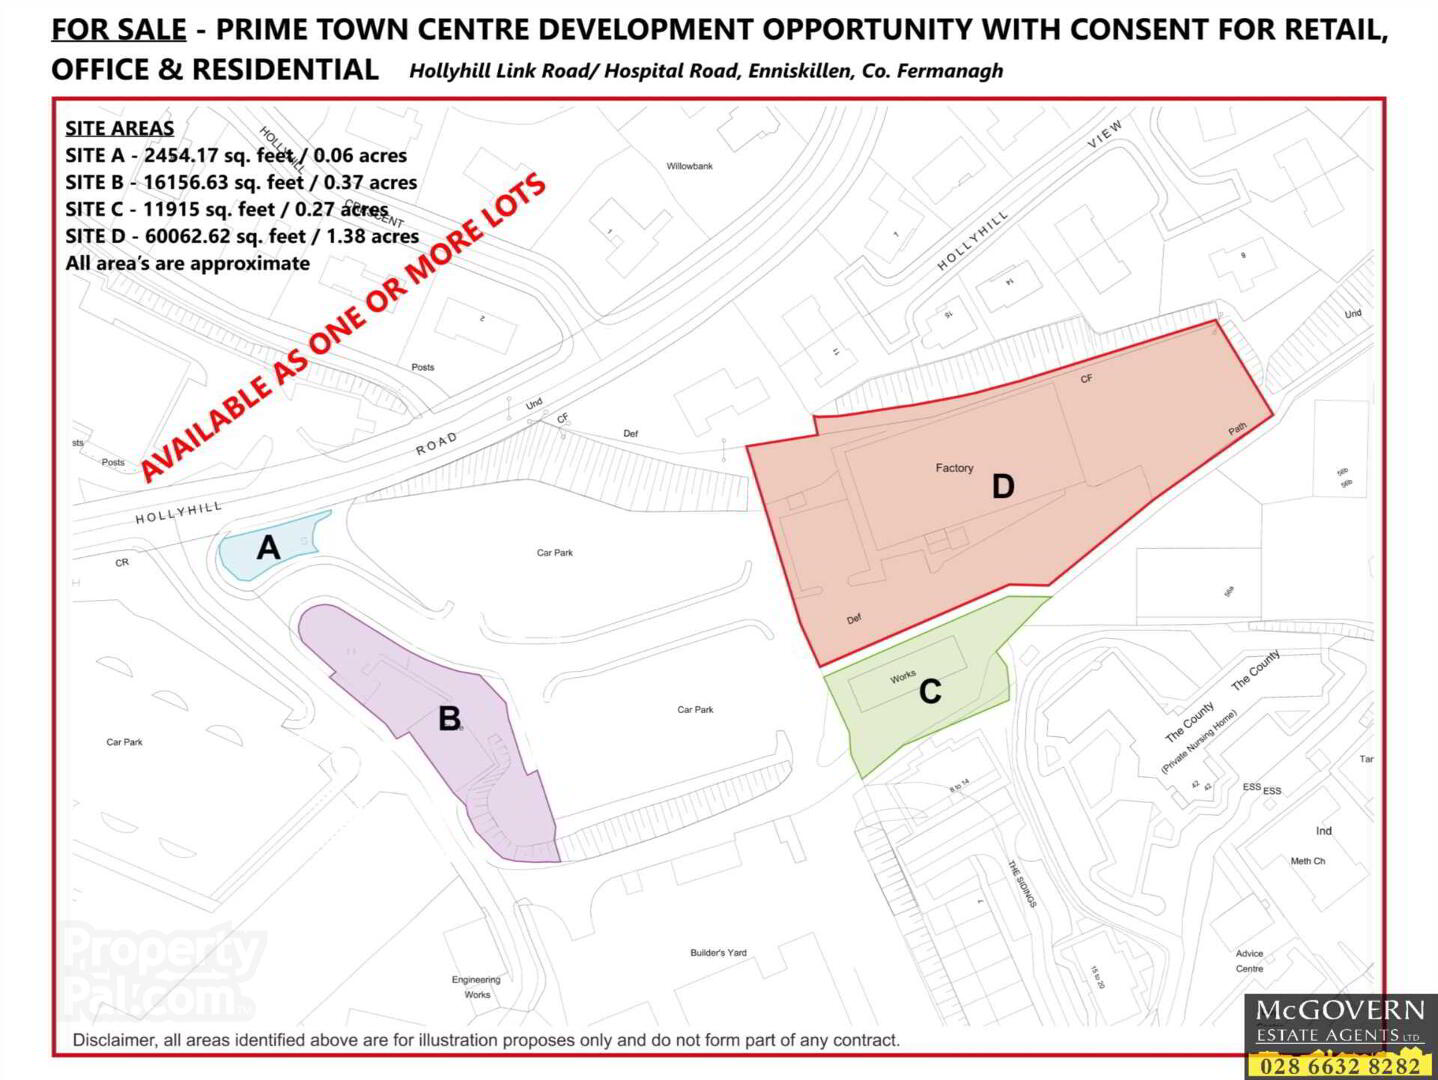 Prime Town Centre Development Opportunity